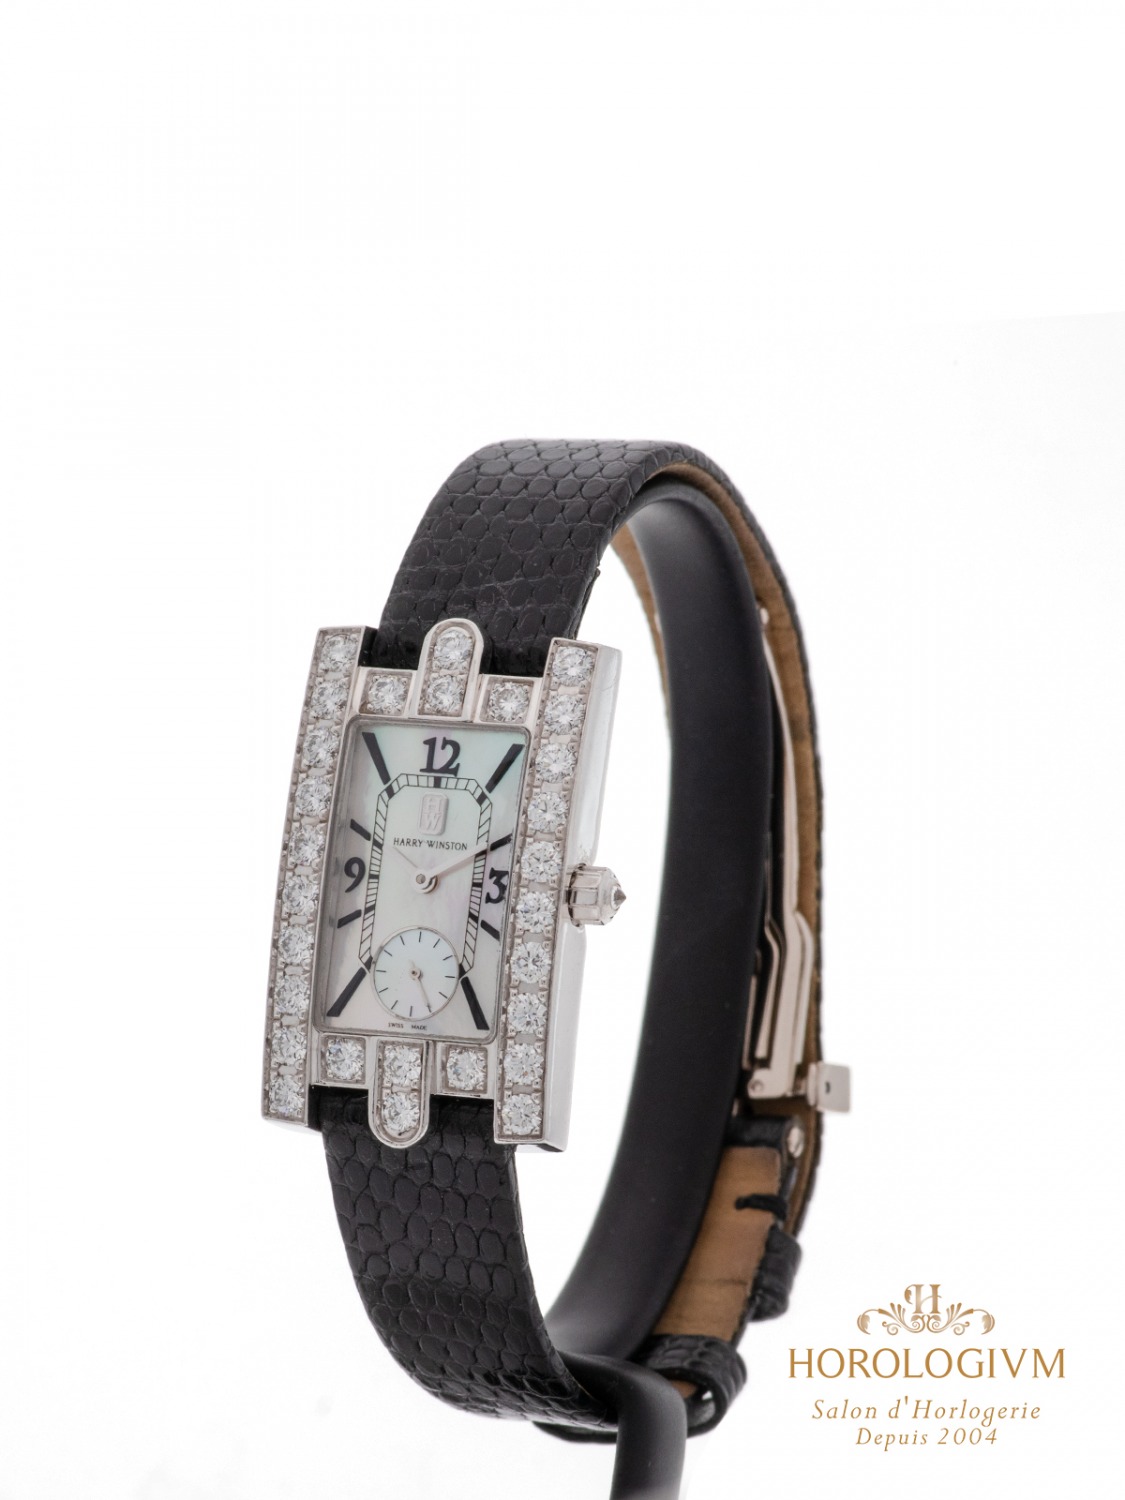 Harry Winston Avenue Dimond Ref. 310/LQW watch, white gold